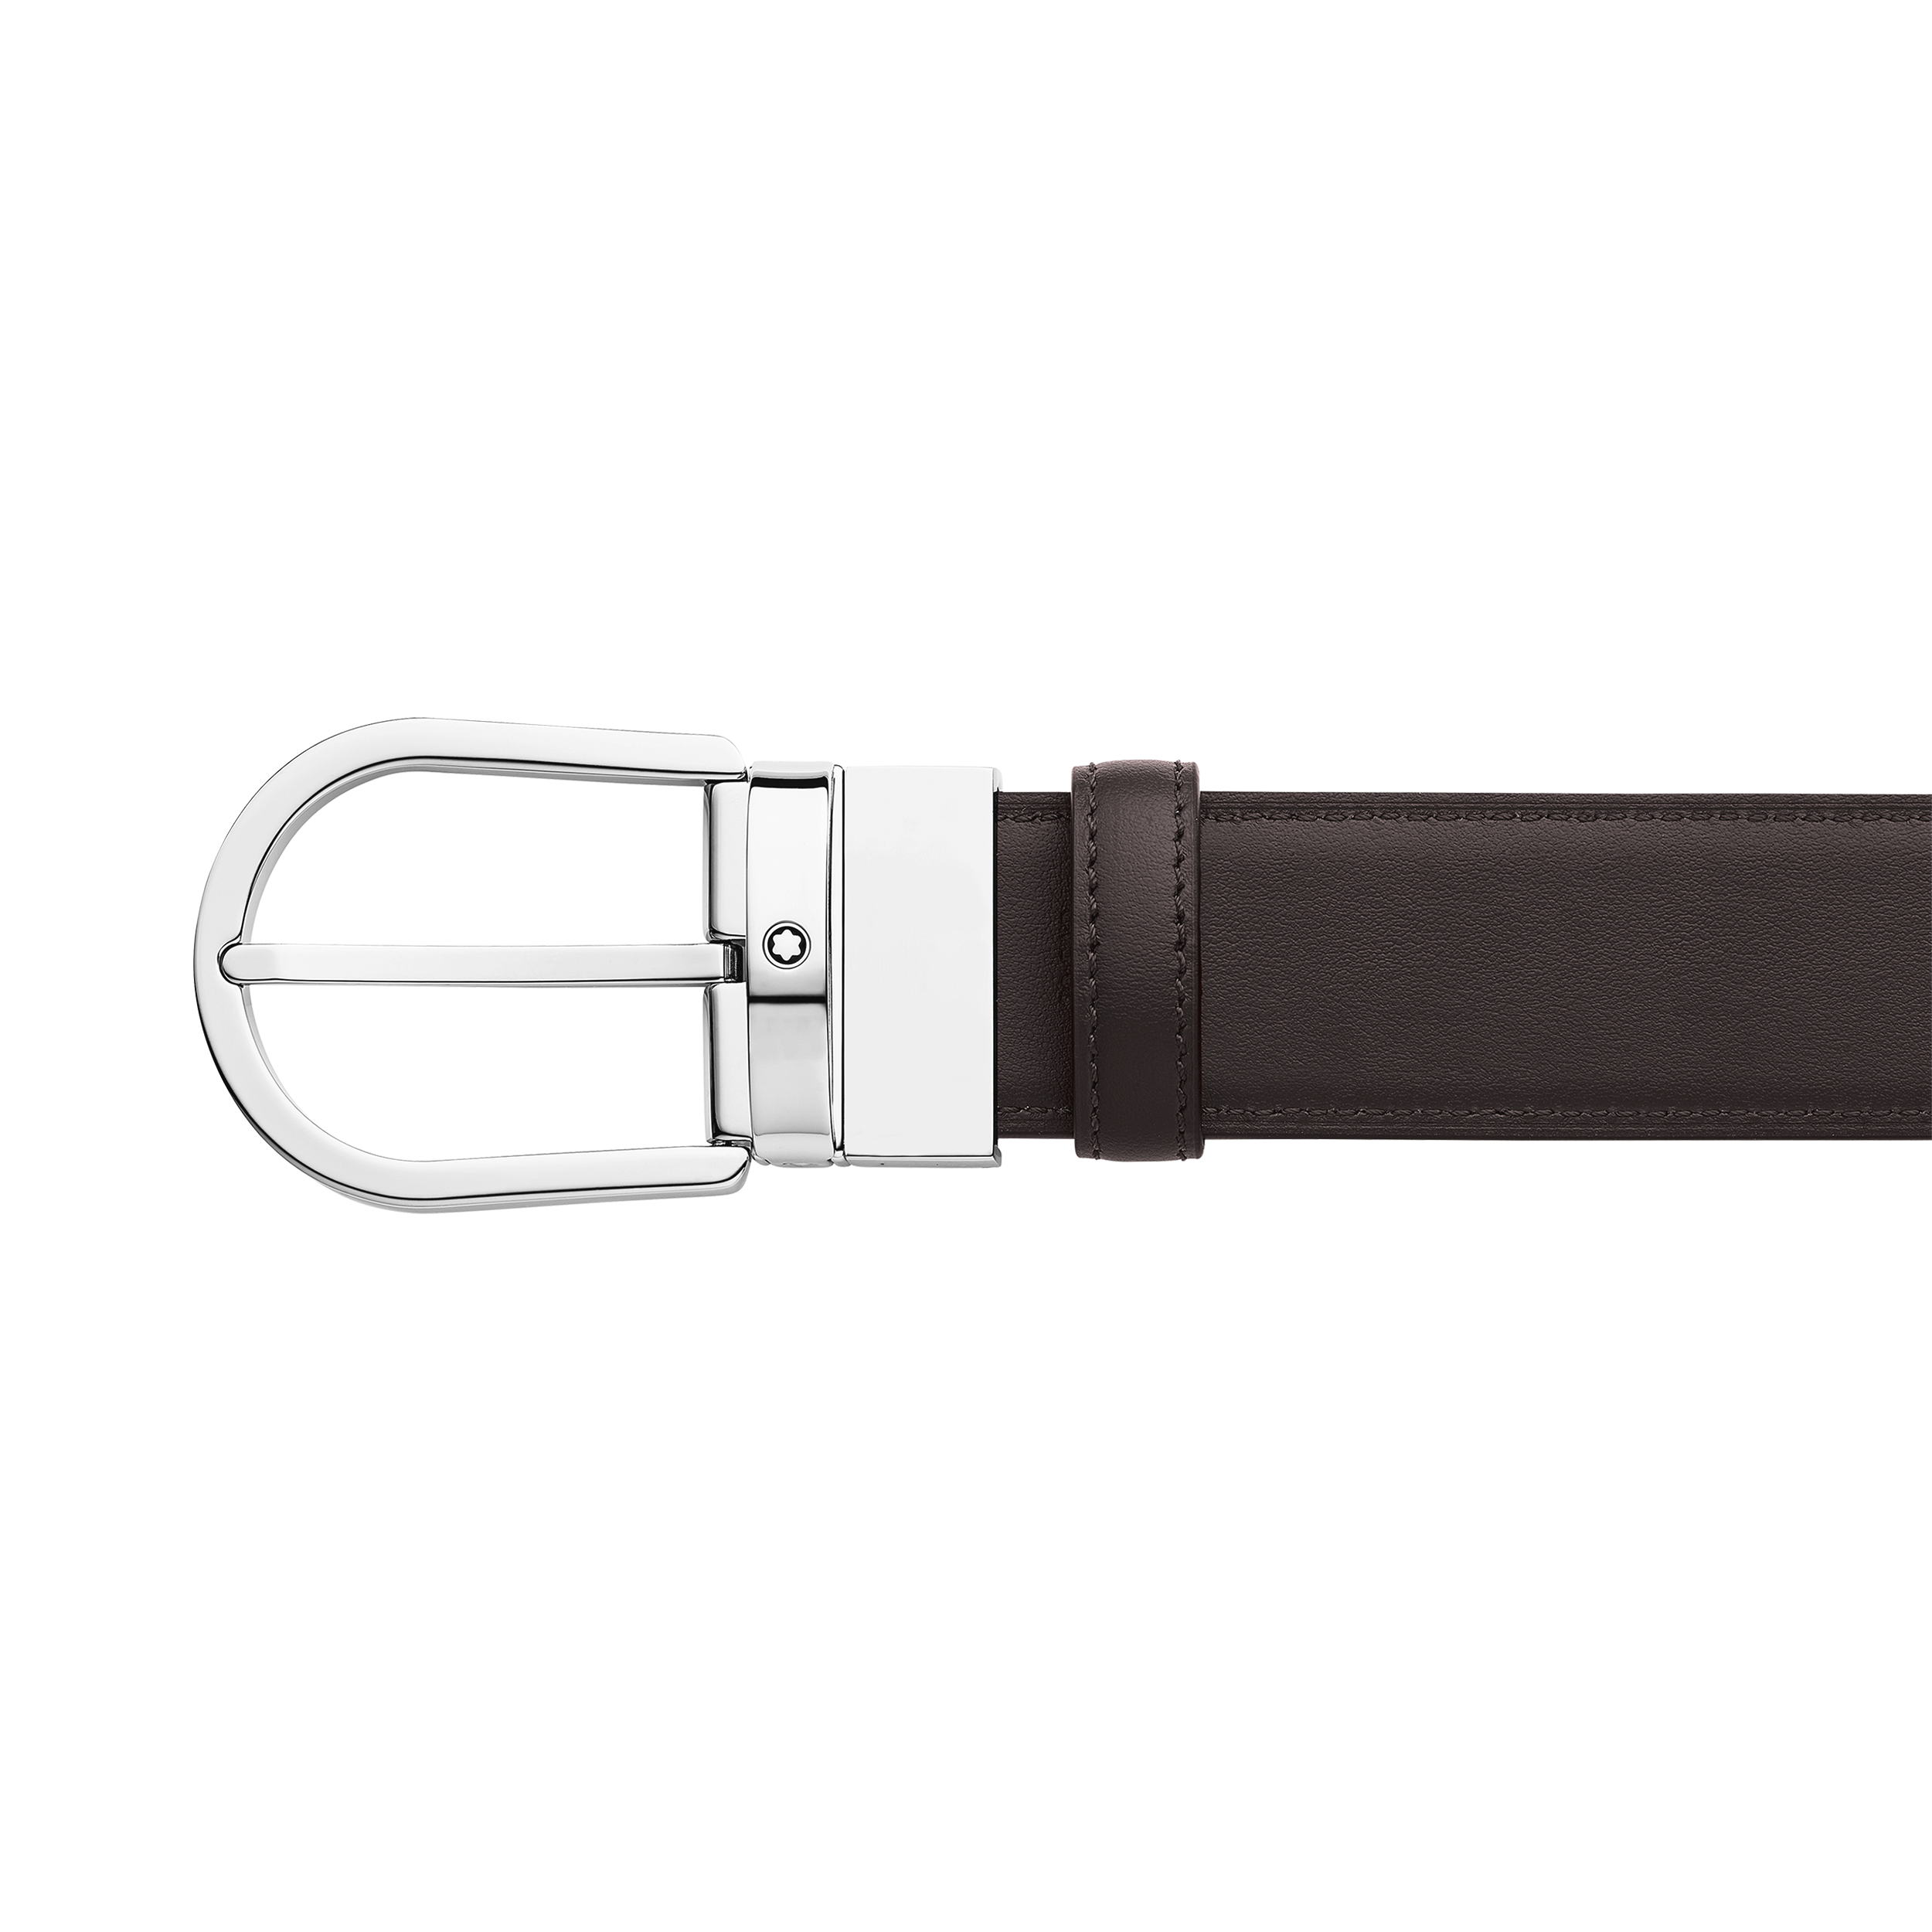 Horseshoe buckle black/tan 35 mm leather belt, image 2